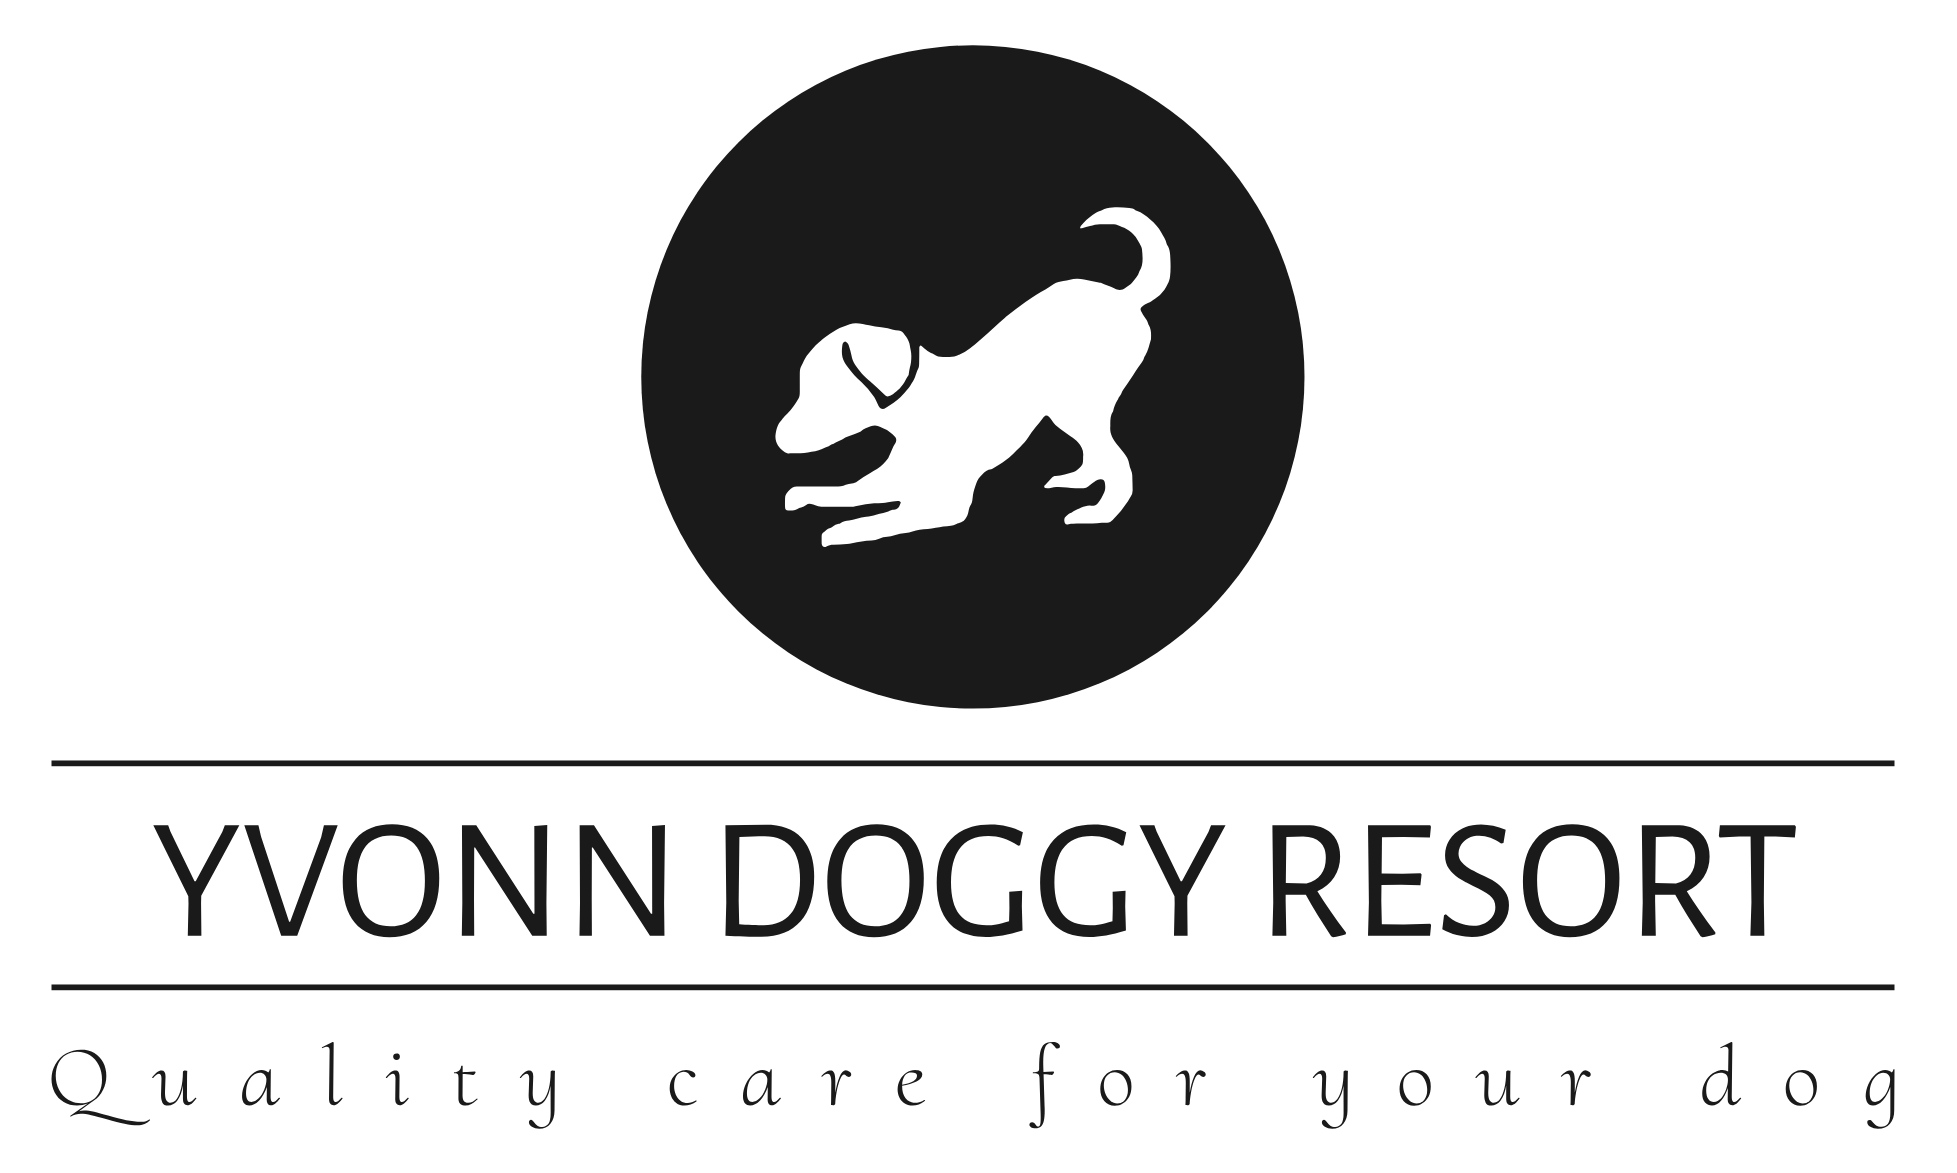 Yvonn Doggy Resort